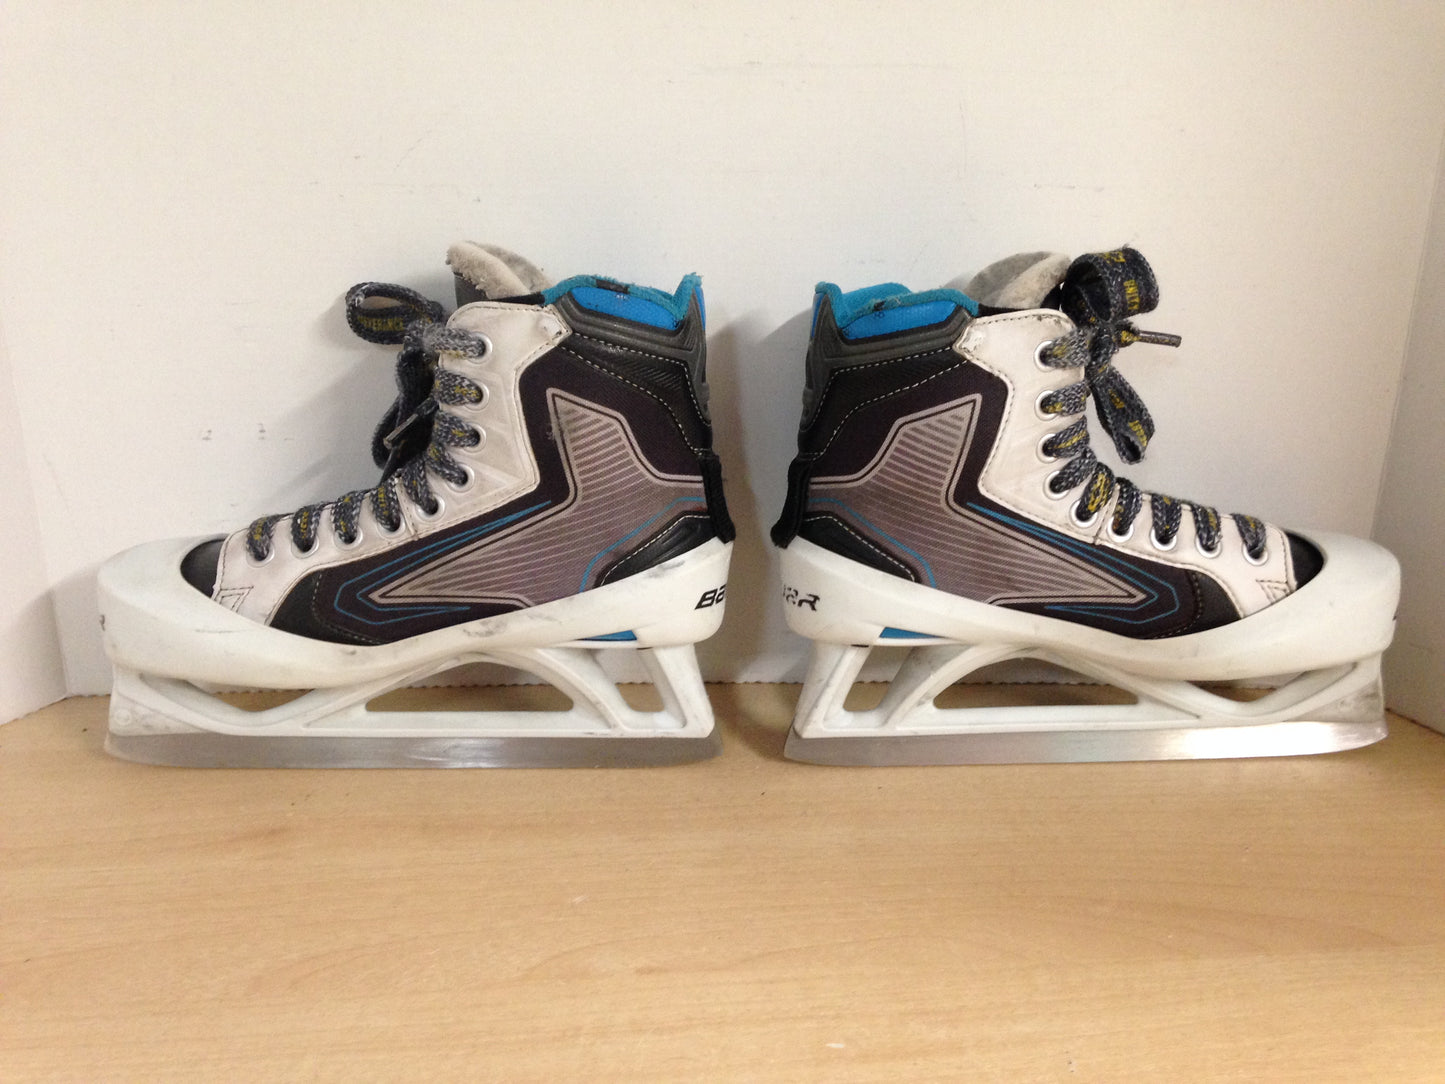 Hockey Goalie Skates Child Size 4.5 Shoe Size Bauer 5000 Minor Wear